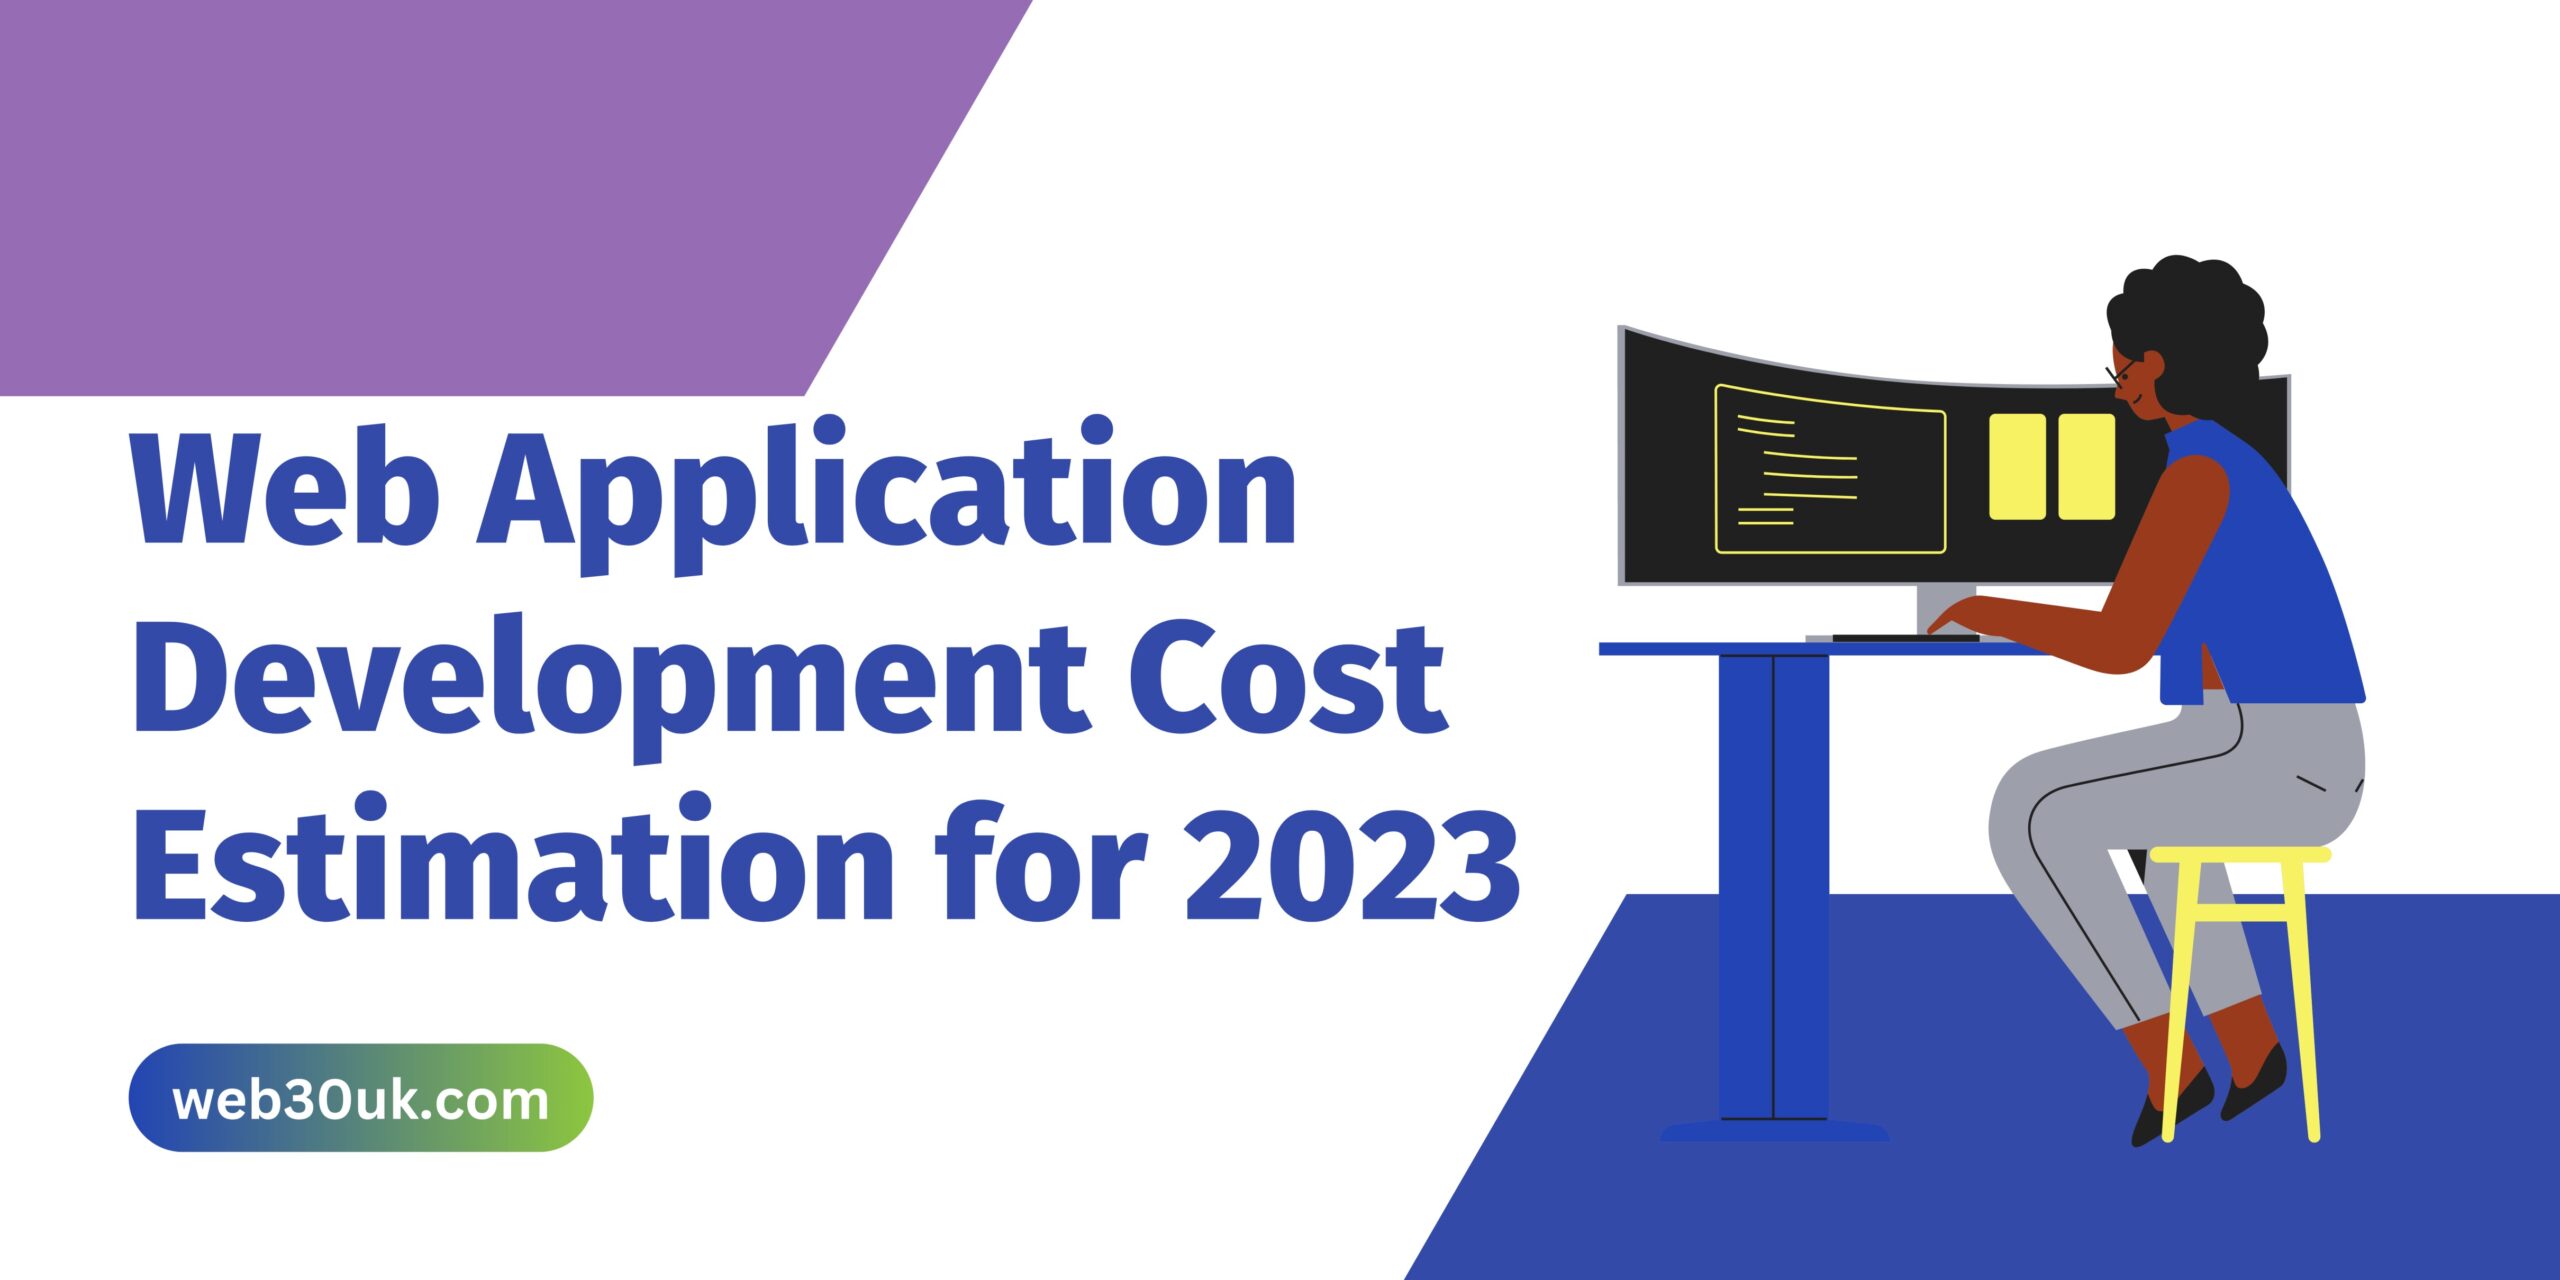 Web Application Development Cost Estimation for 2023